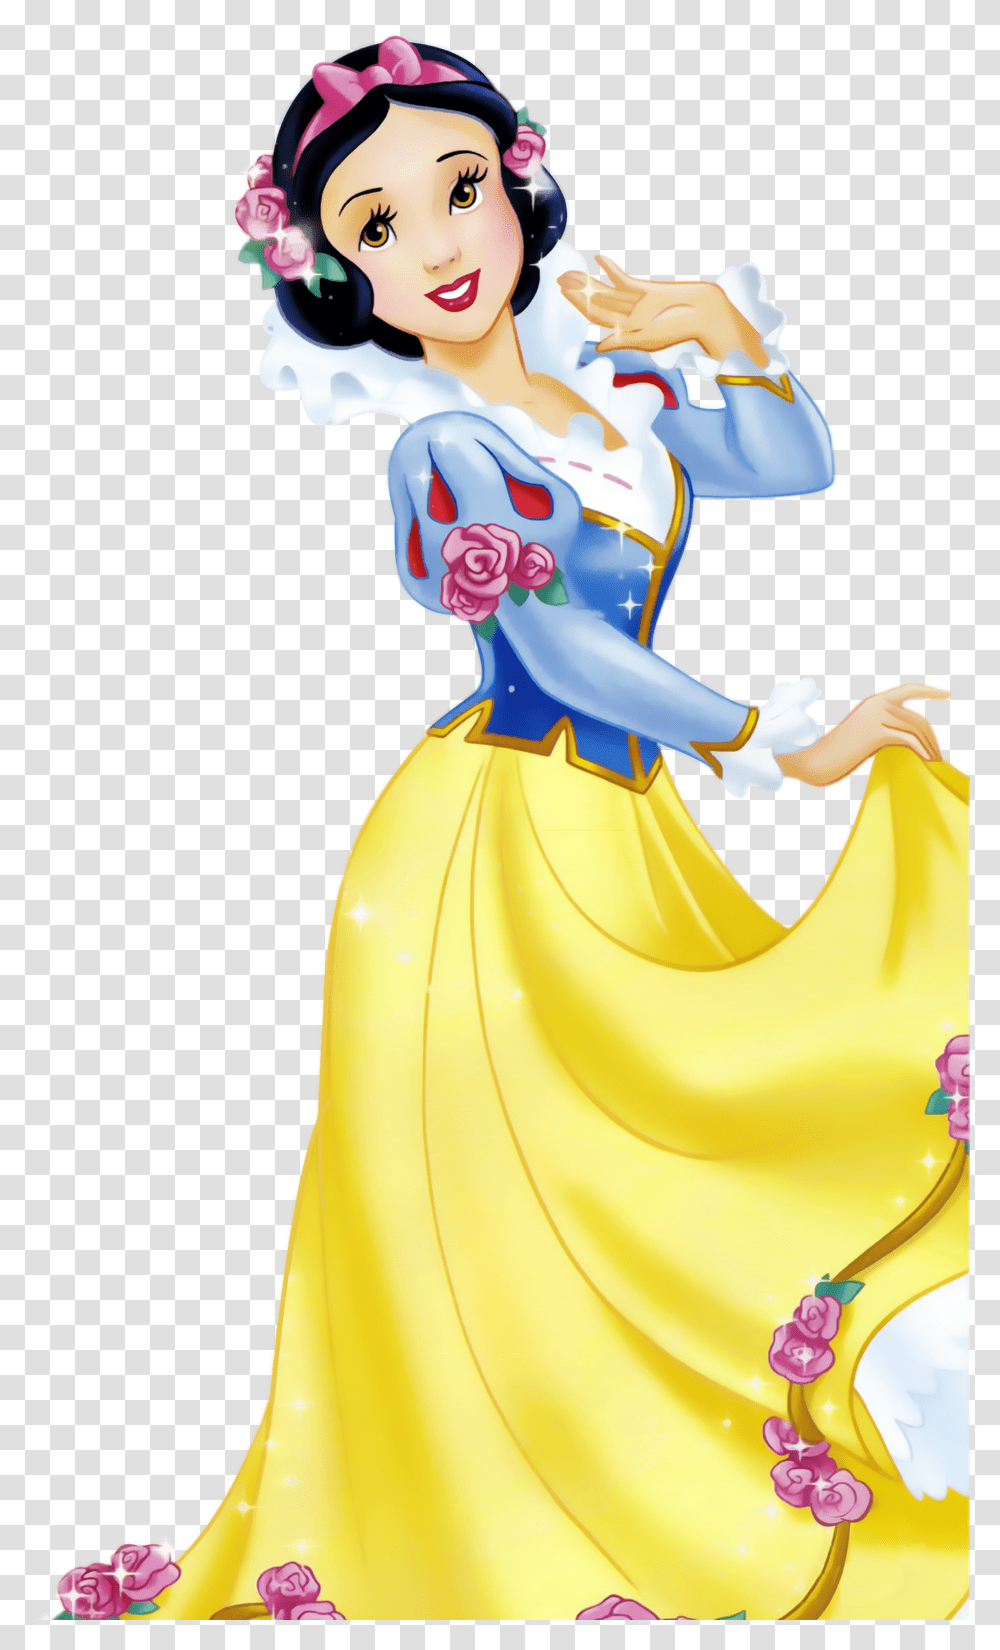 Disney Princess Background, Performer, Figurine, Leisure Activities, Dance Pose Transparent Png